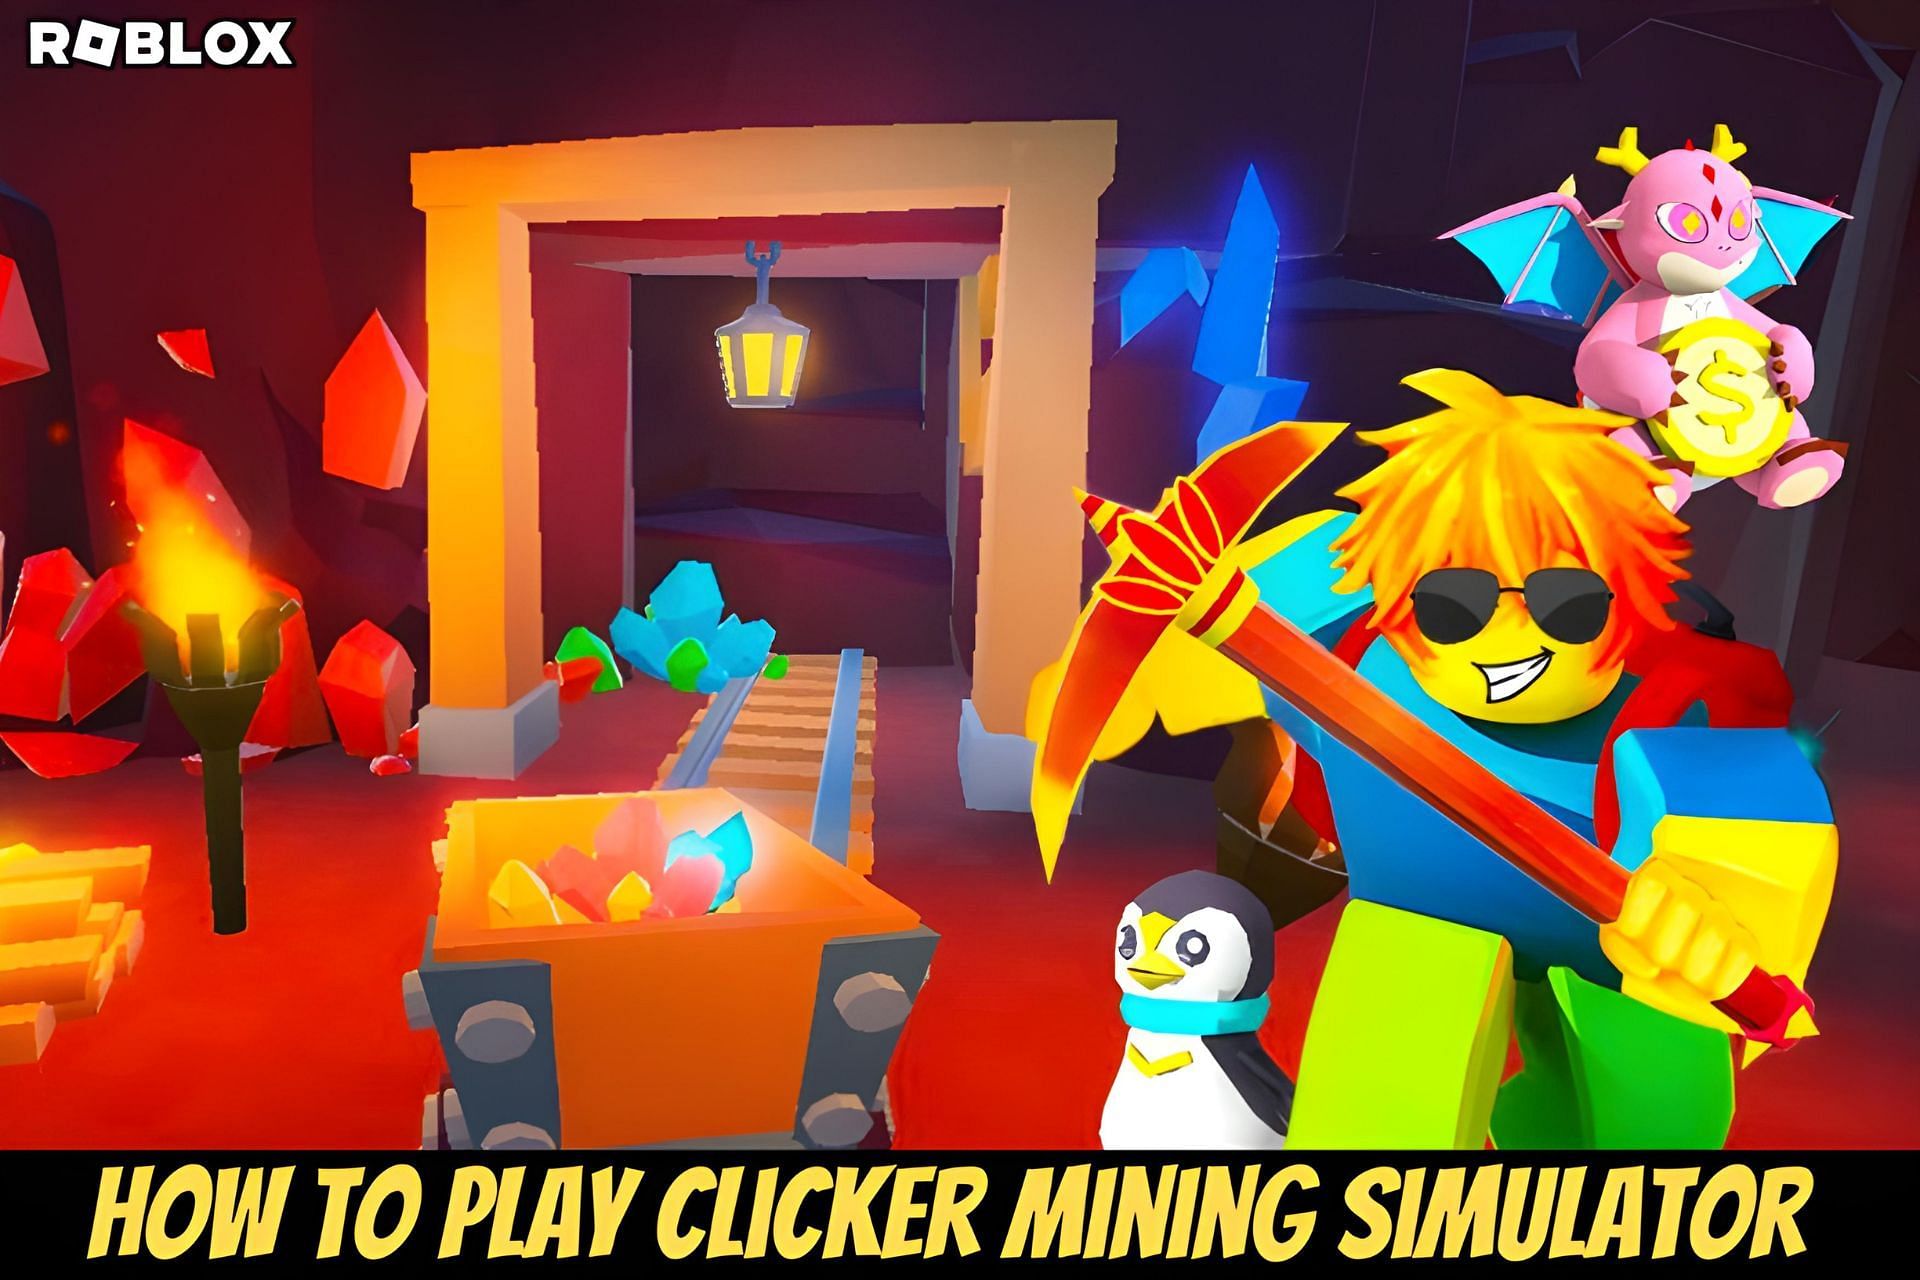 Have fun playing mining game (Image via Roblox)